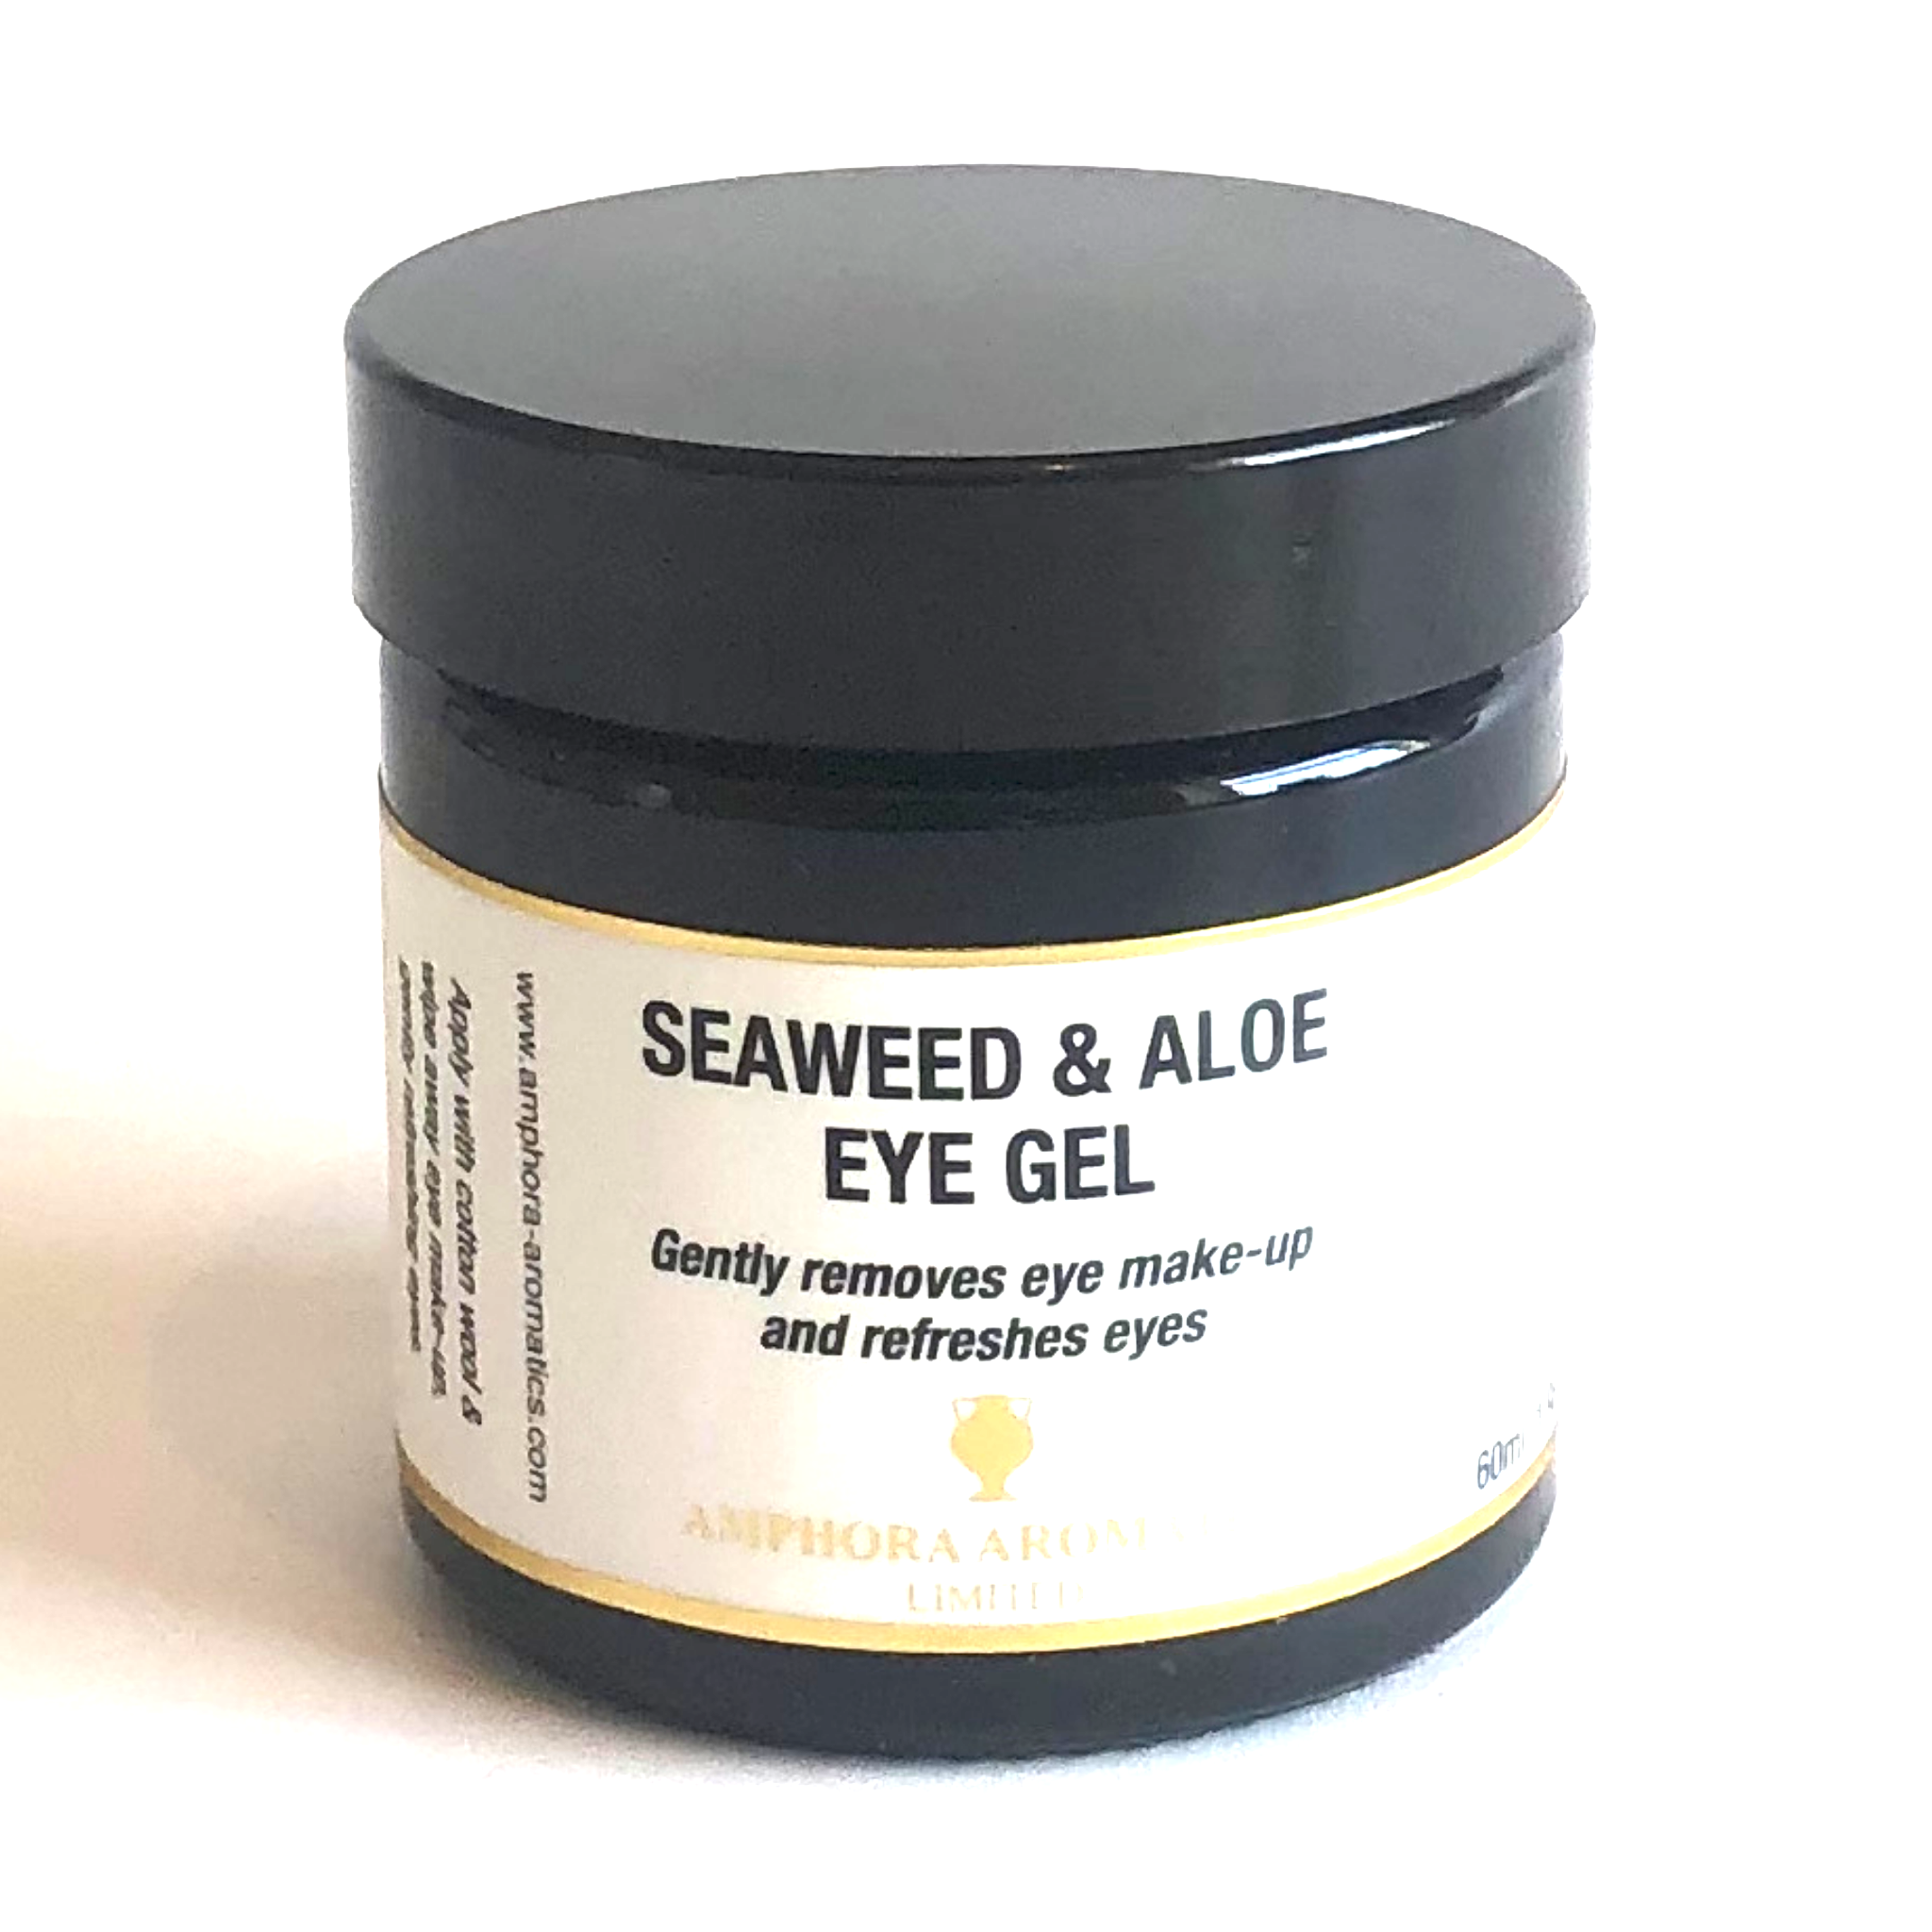 Seaweed & Aloe Eye Gel by Amphora Aromatics